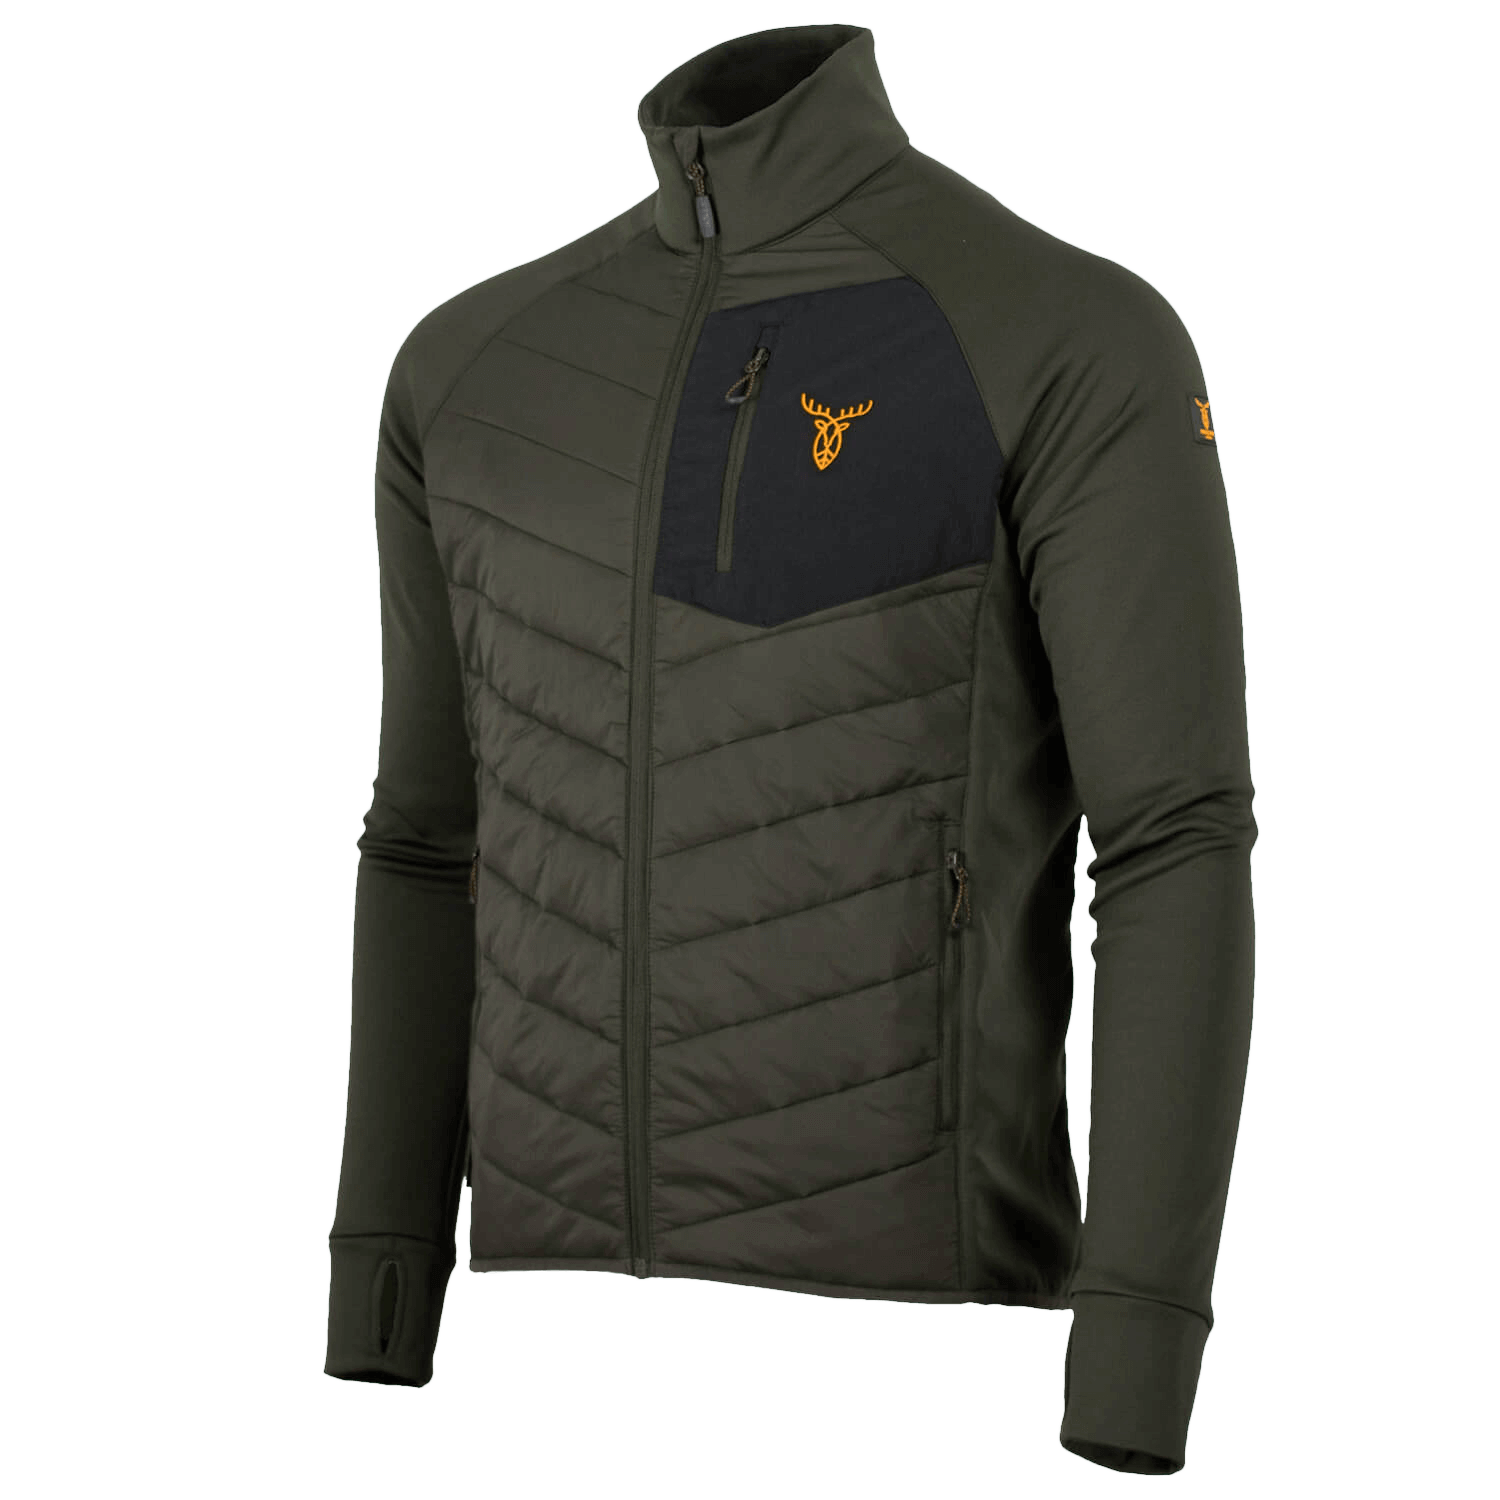 Pirscher Gear Hybrid-Fleece Jacke - Jagdbekleidung Herren